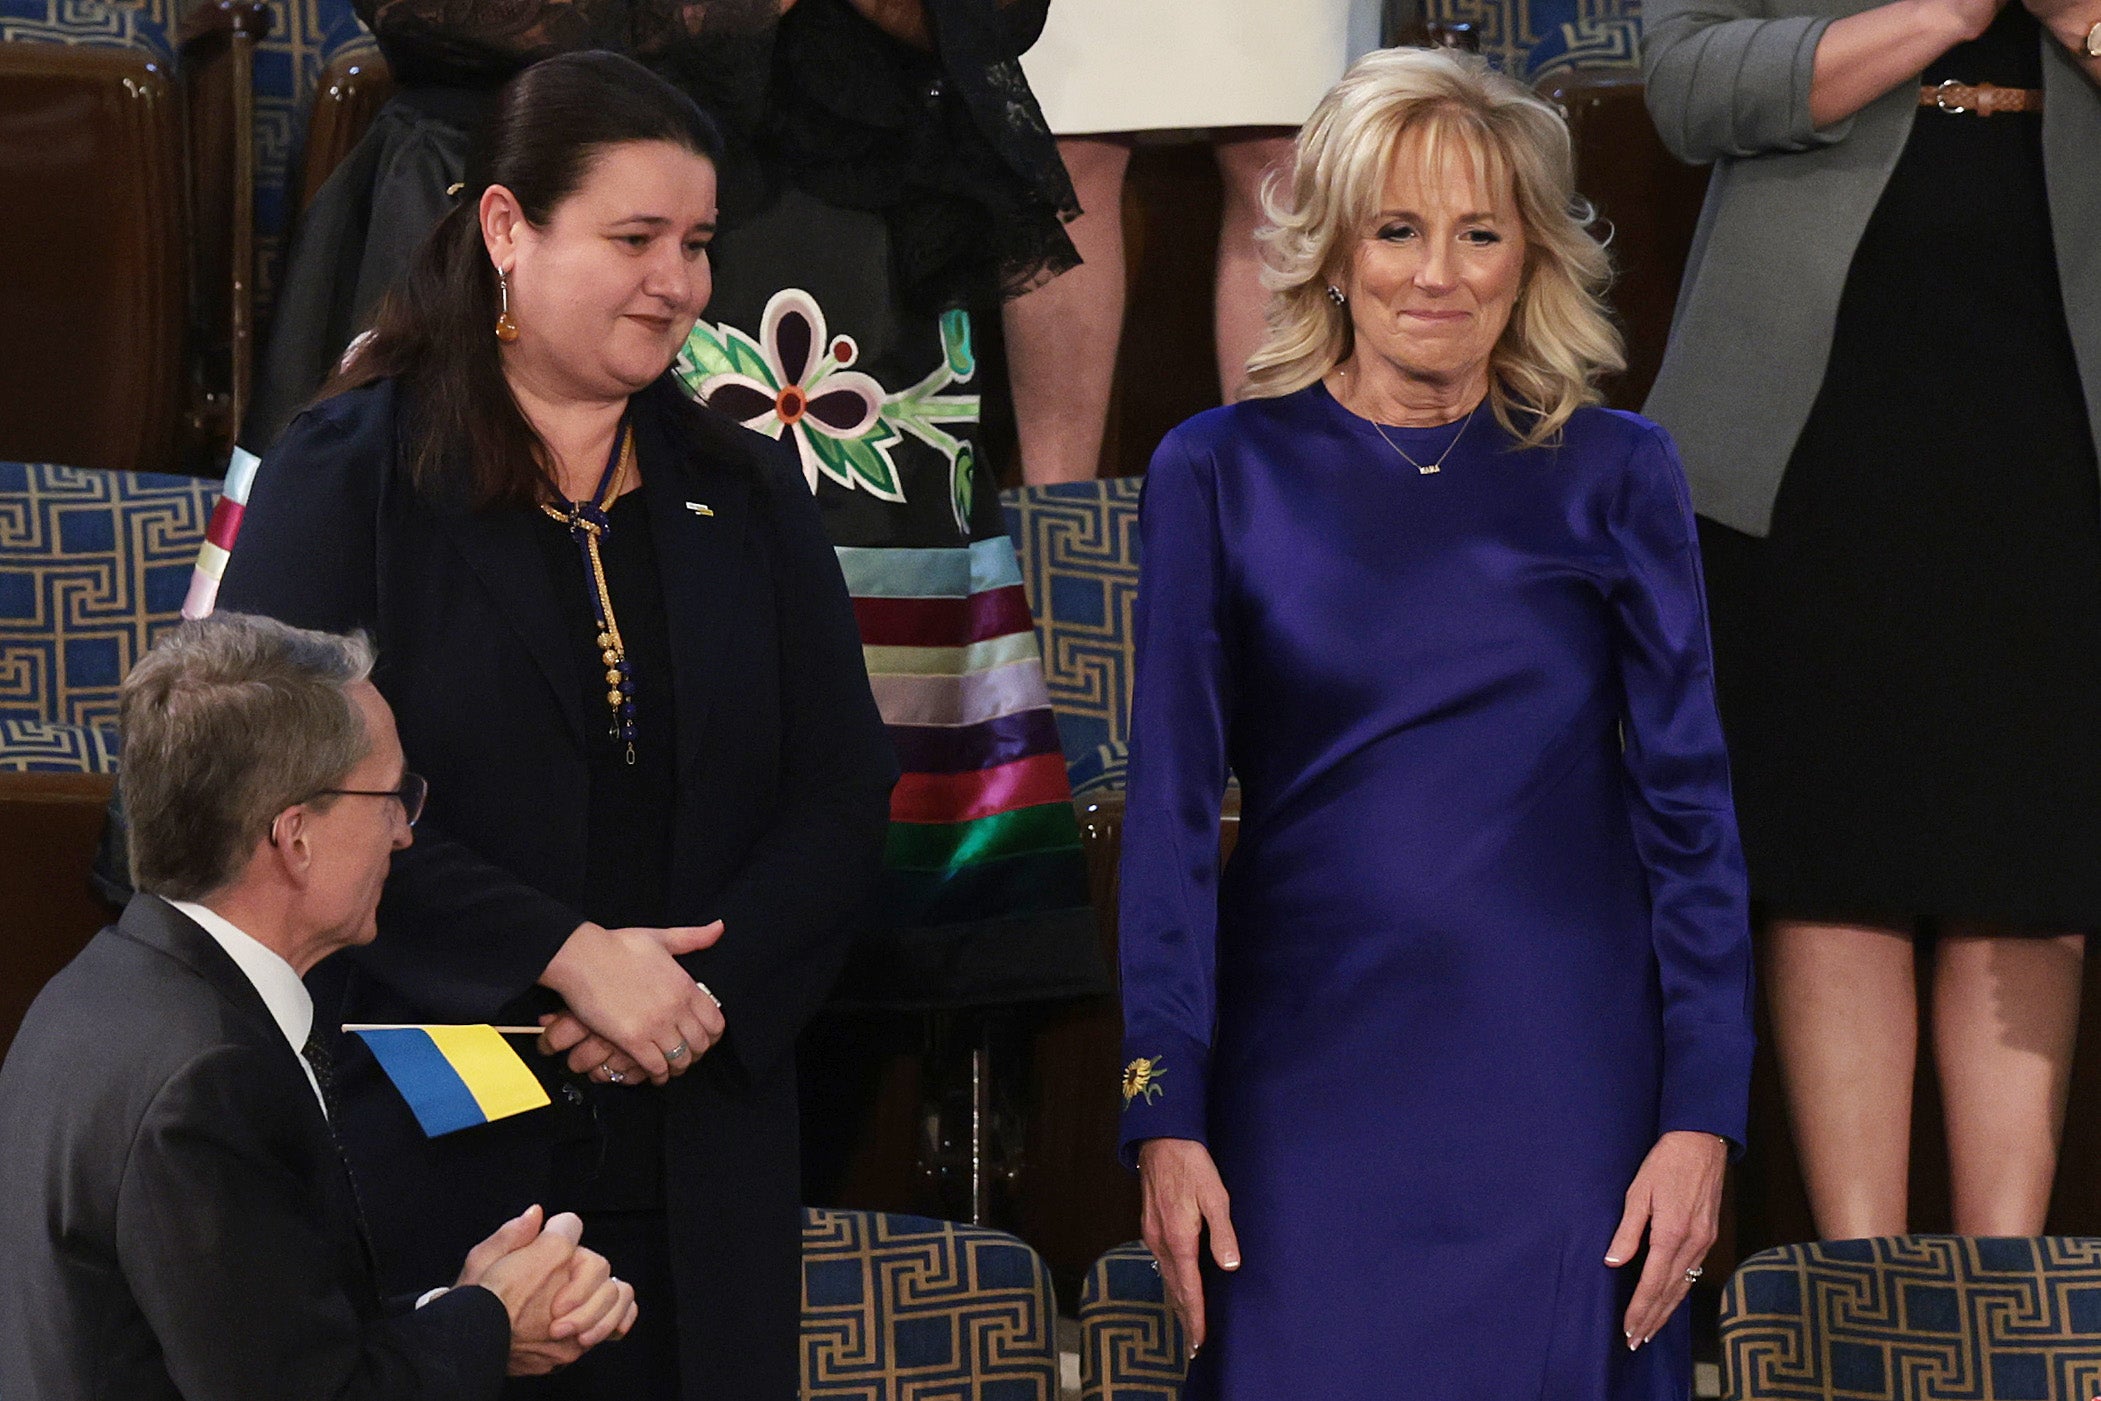 Jill Biden receives praise after wearing blue dress emblazoned with sunflower in support of Ukraine at SOTU